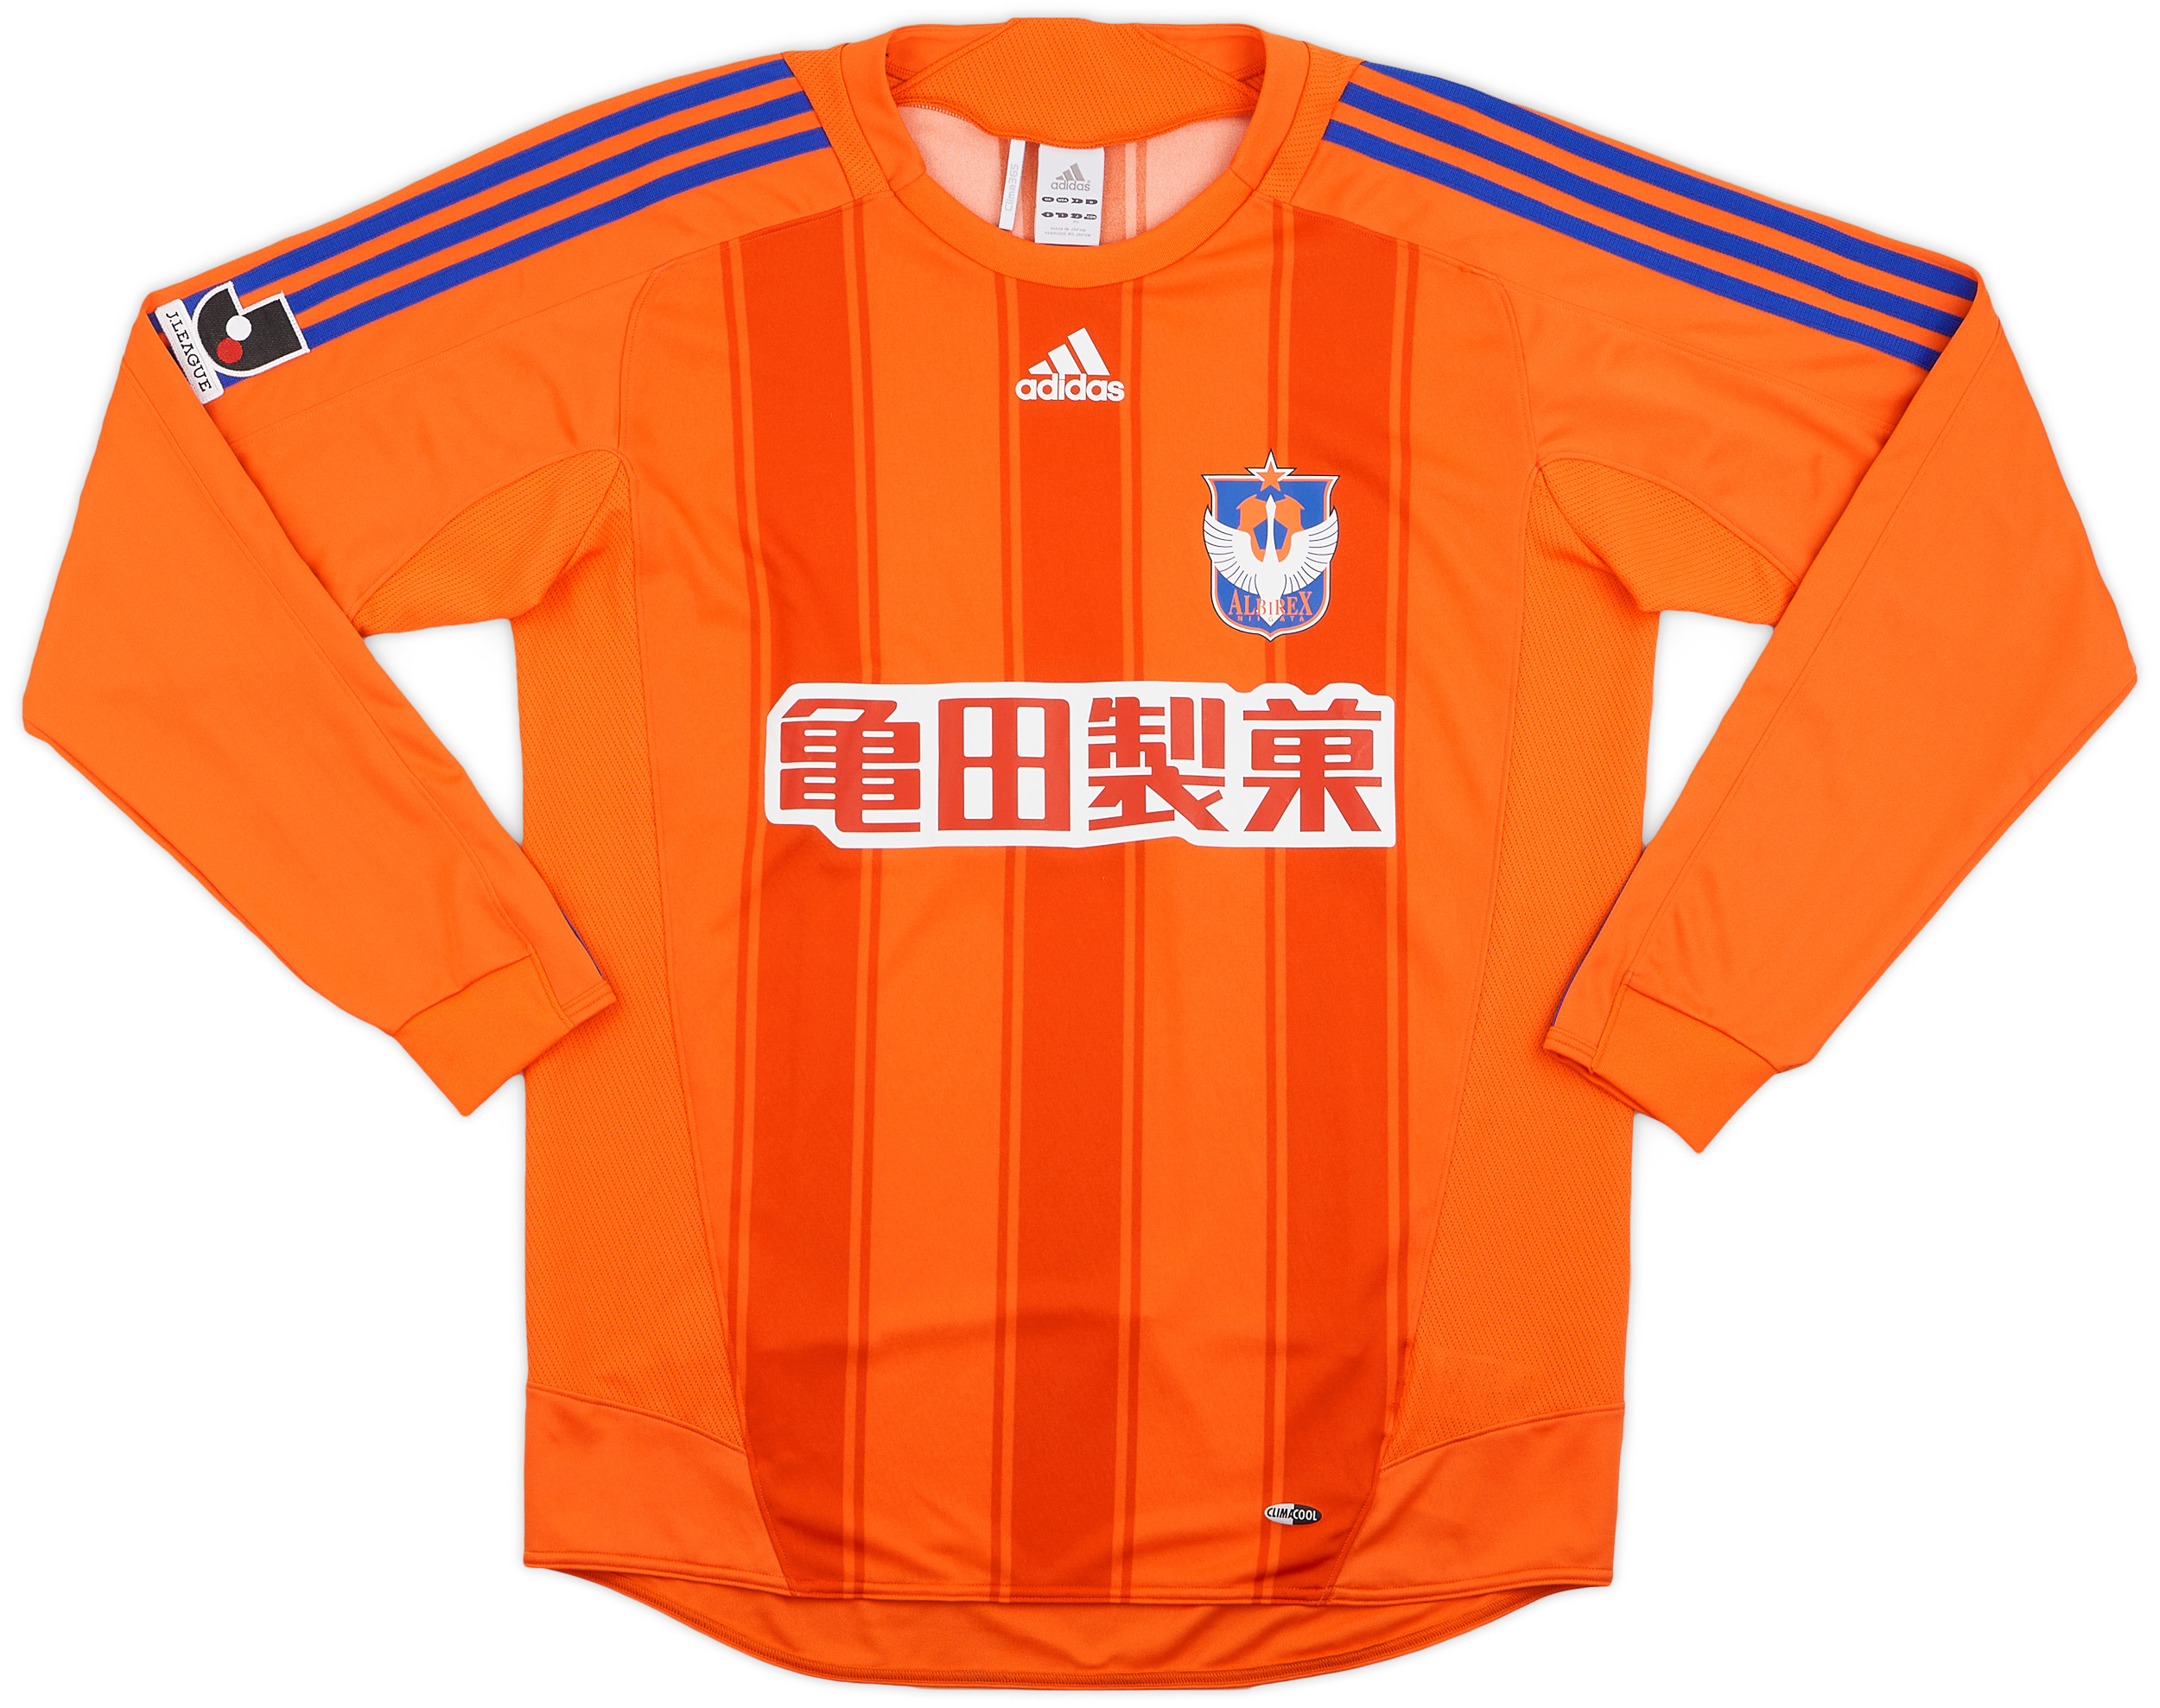  Albirex Niigata  home футболка (Original)